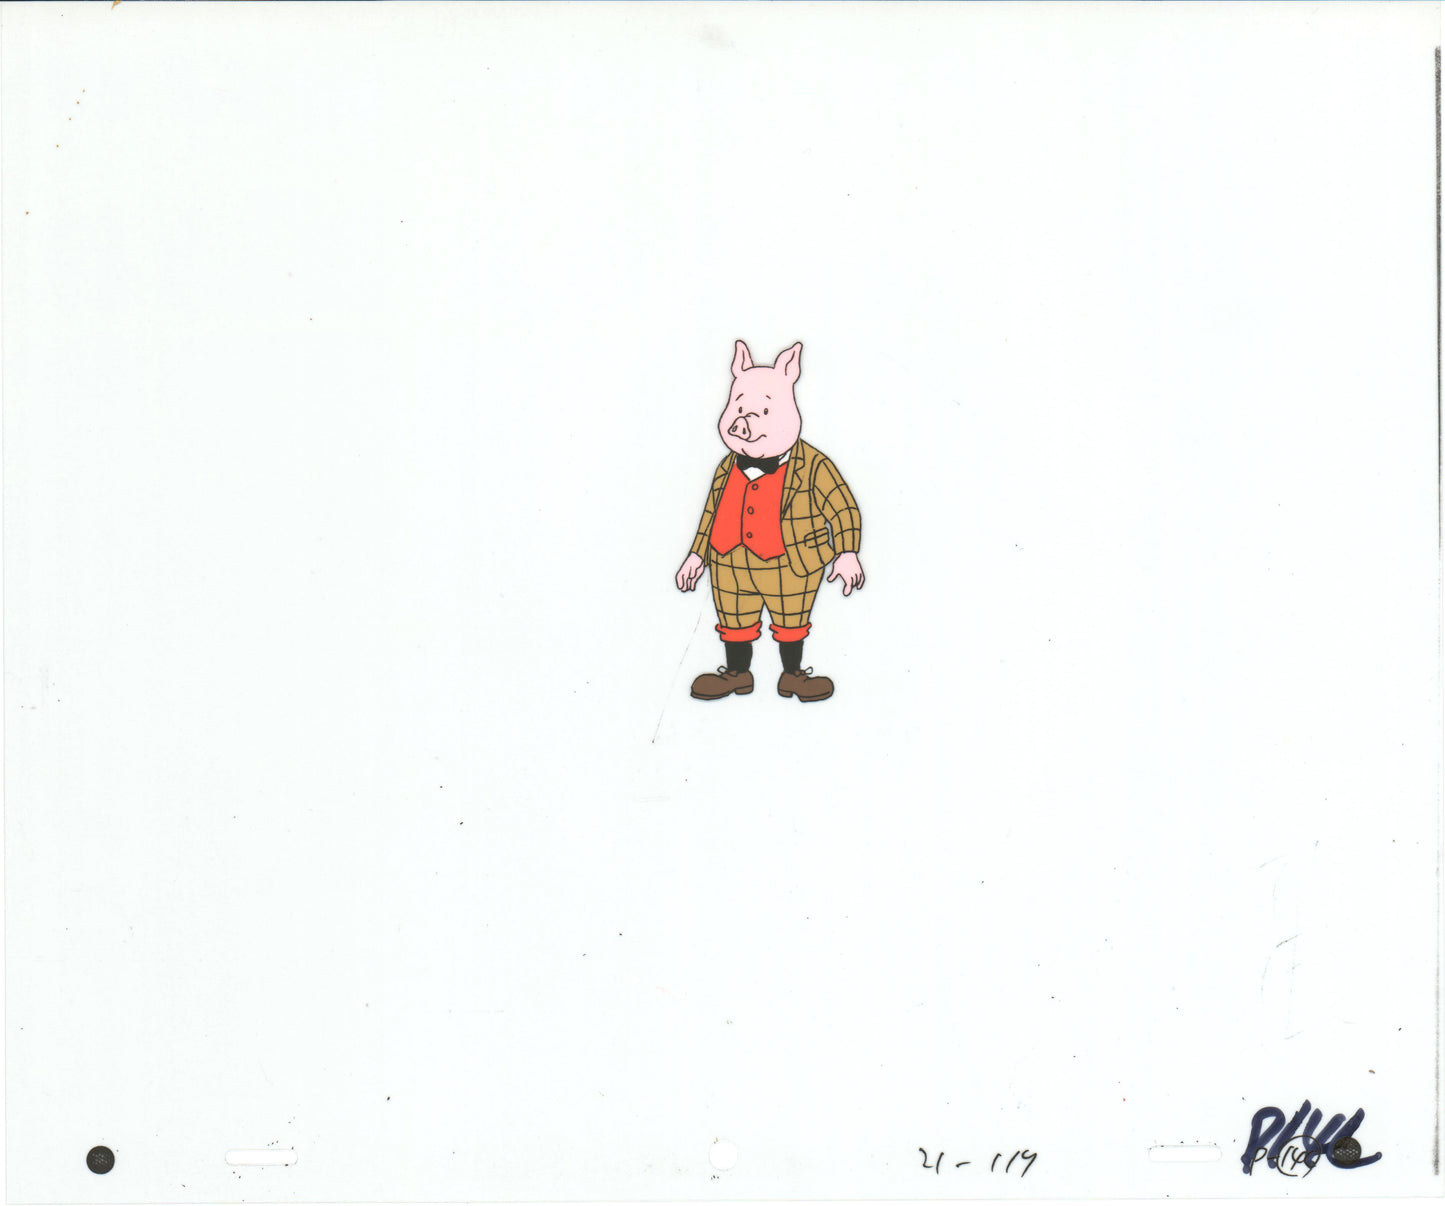 RUPERT Bear Podgy Pig Original Production Animation Cel from the Cartoon by Nelvana Tourtel Animation 1990s 8-333